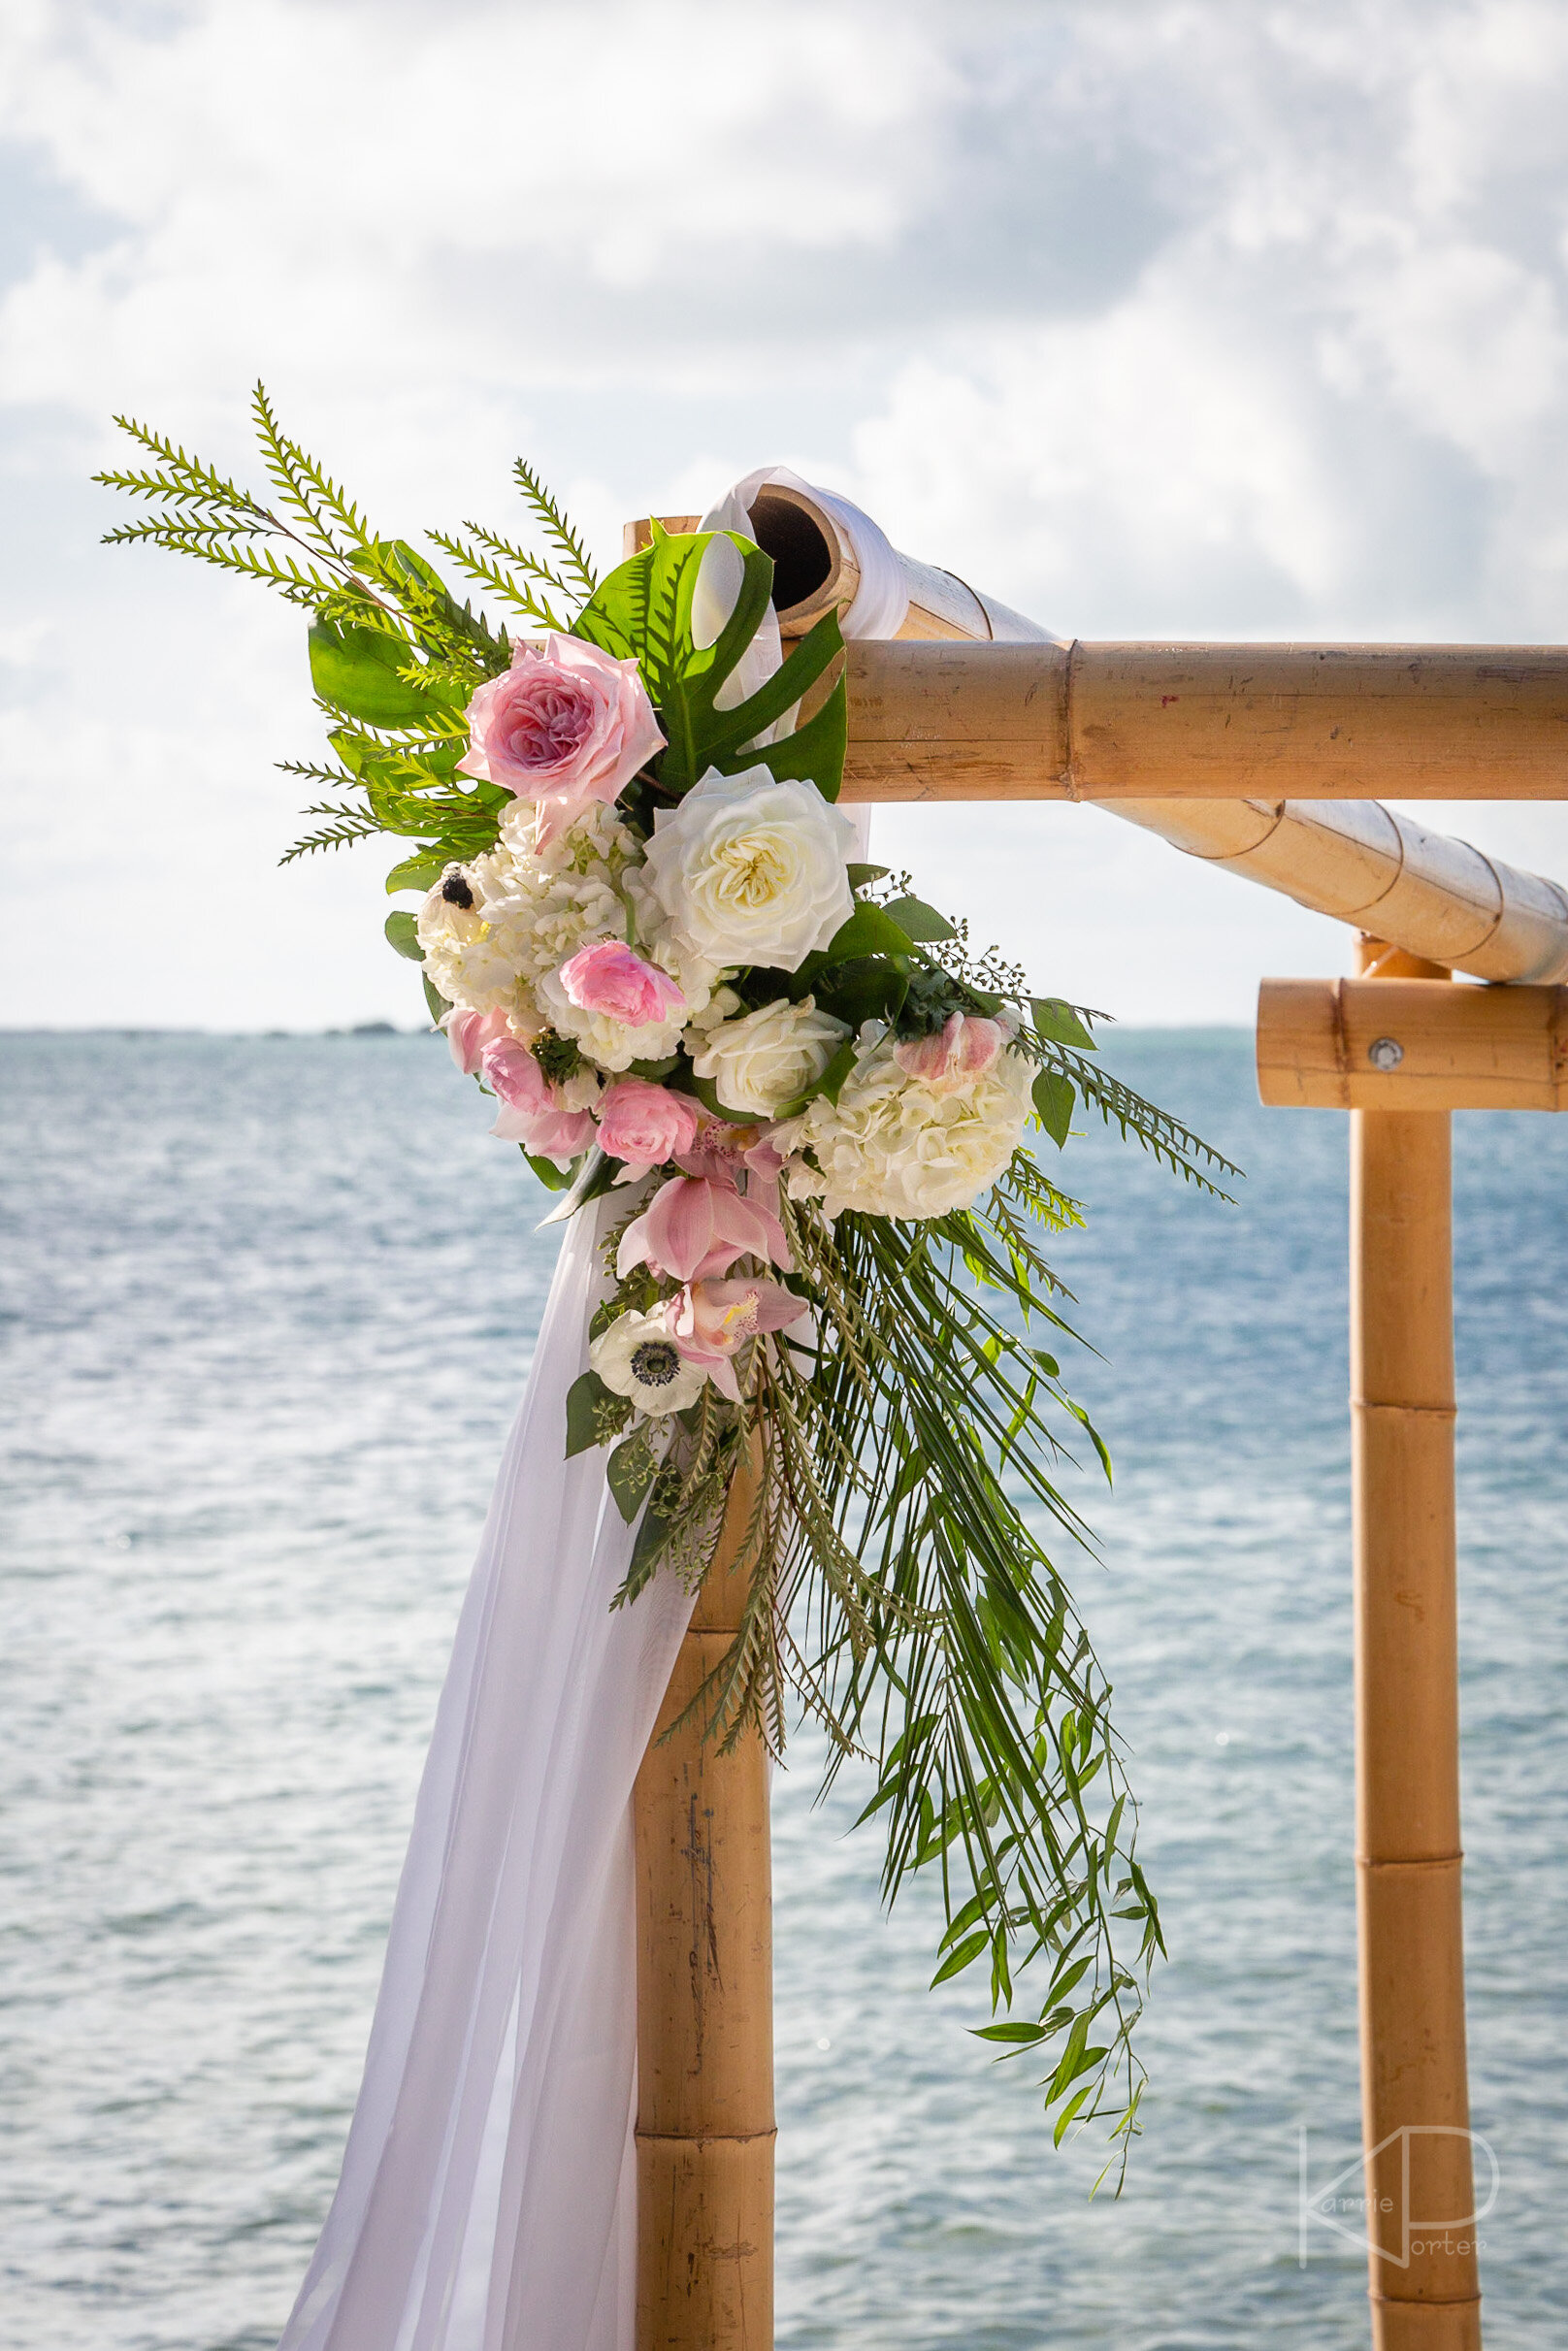  Key Largo wedding at Playa Largo resort photographed by Karrie Porter 